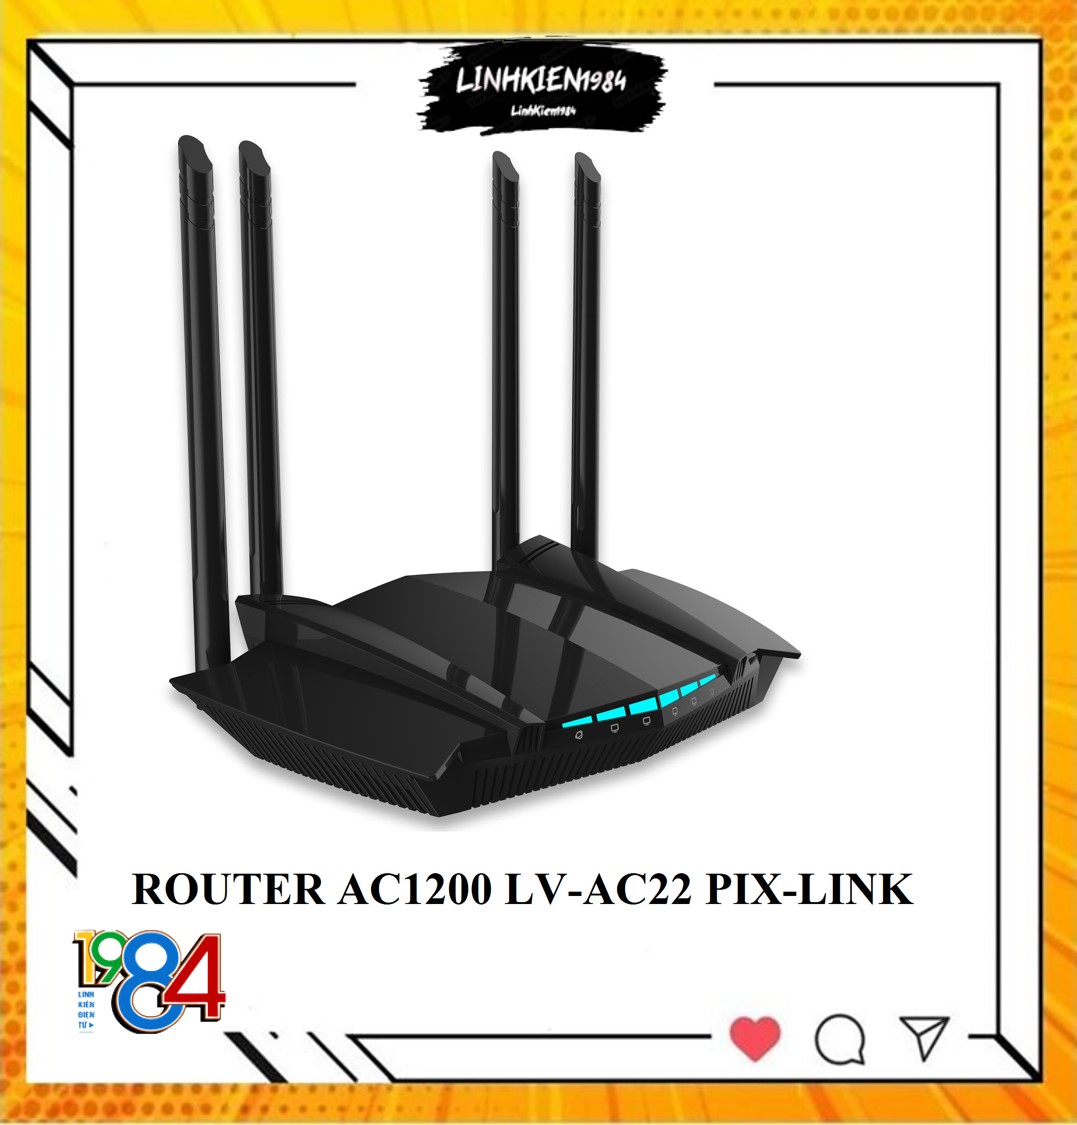 Router AC1200 LV-AC22 Pix-Link